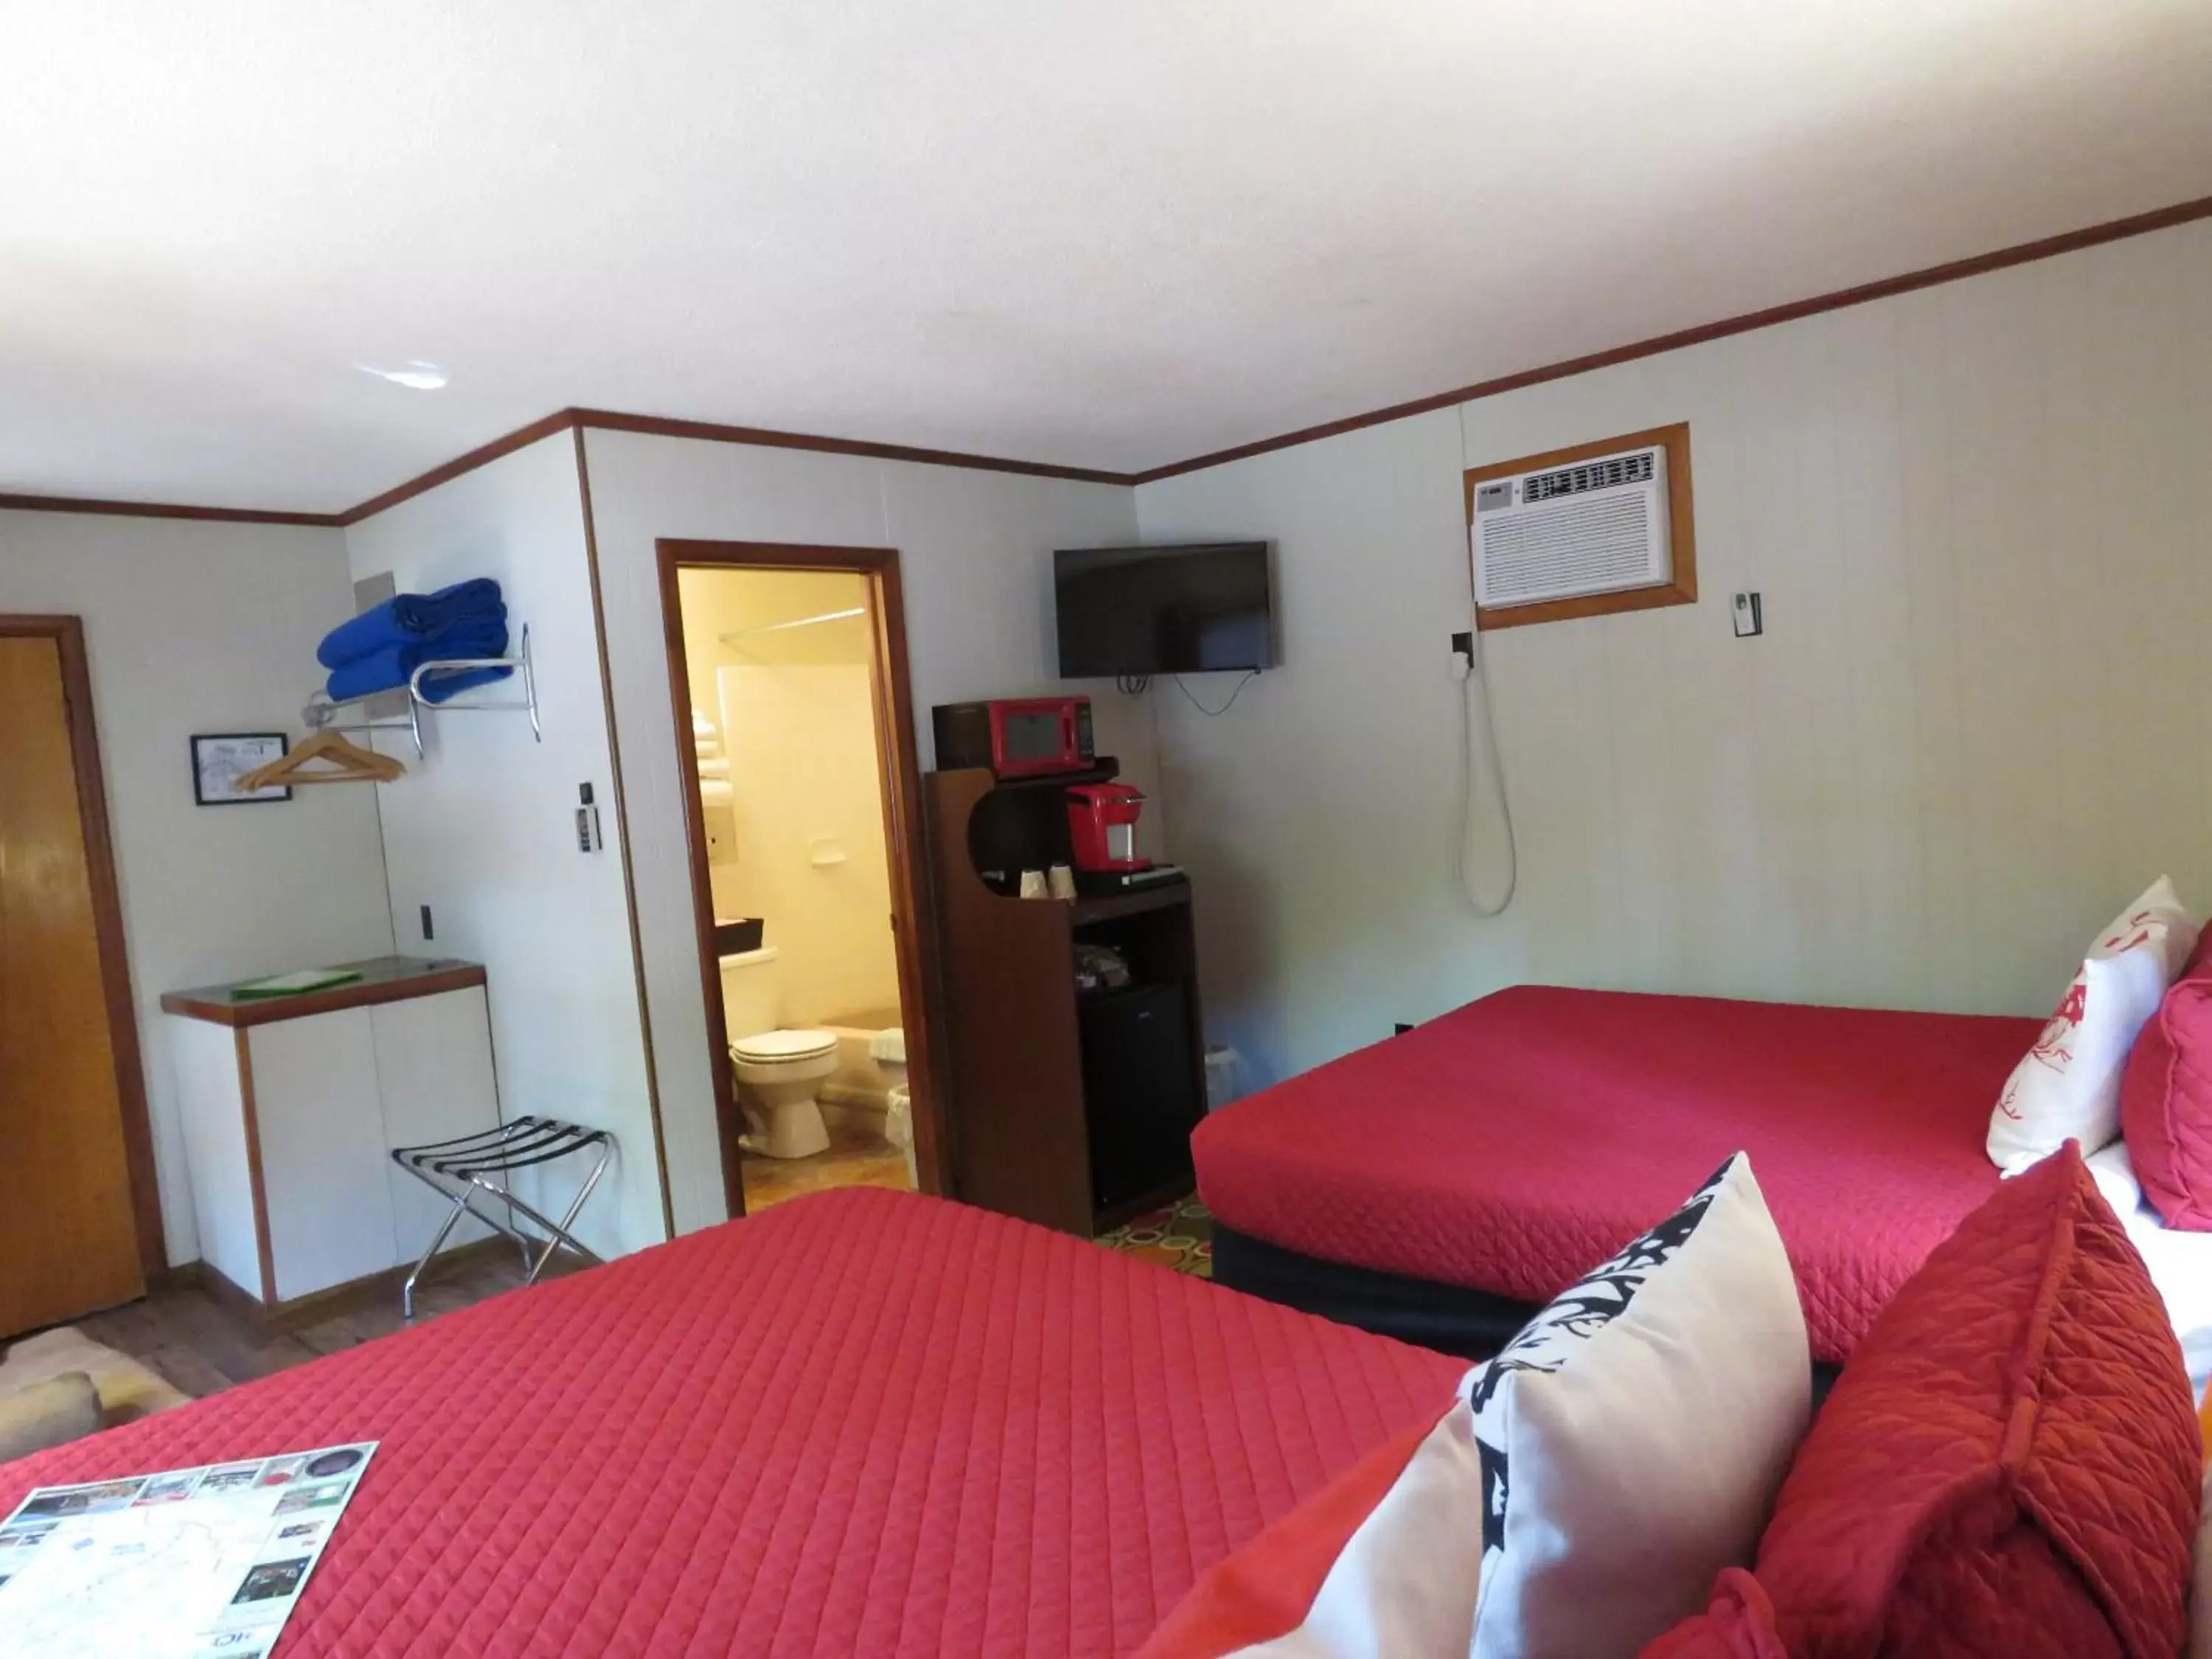 Bedroom, Bed in Tall Pines Inn